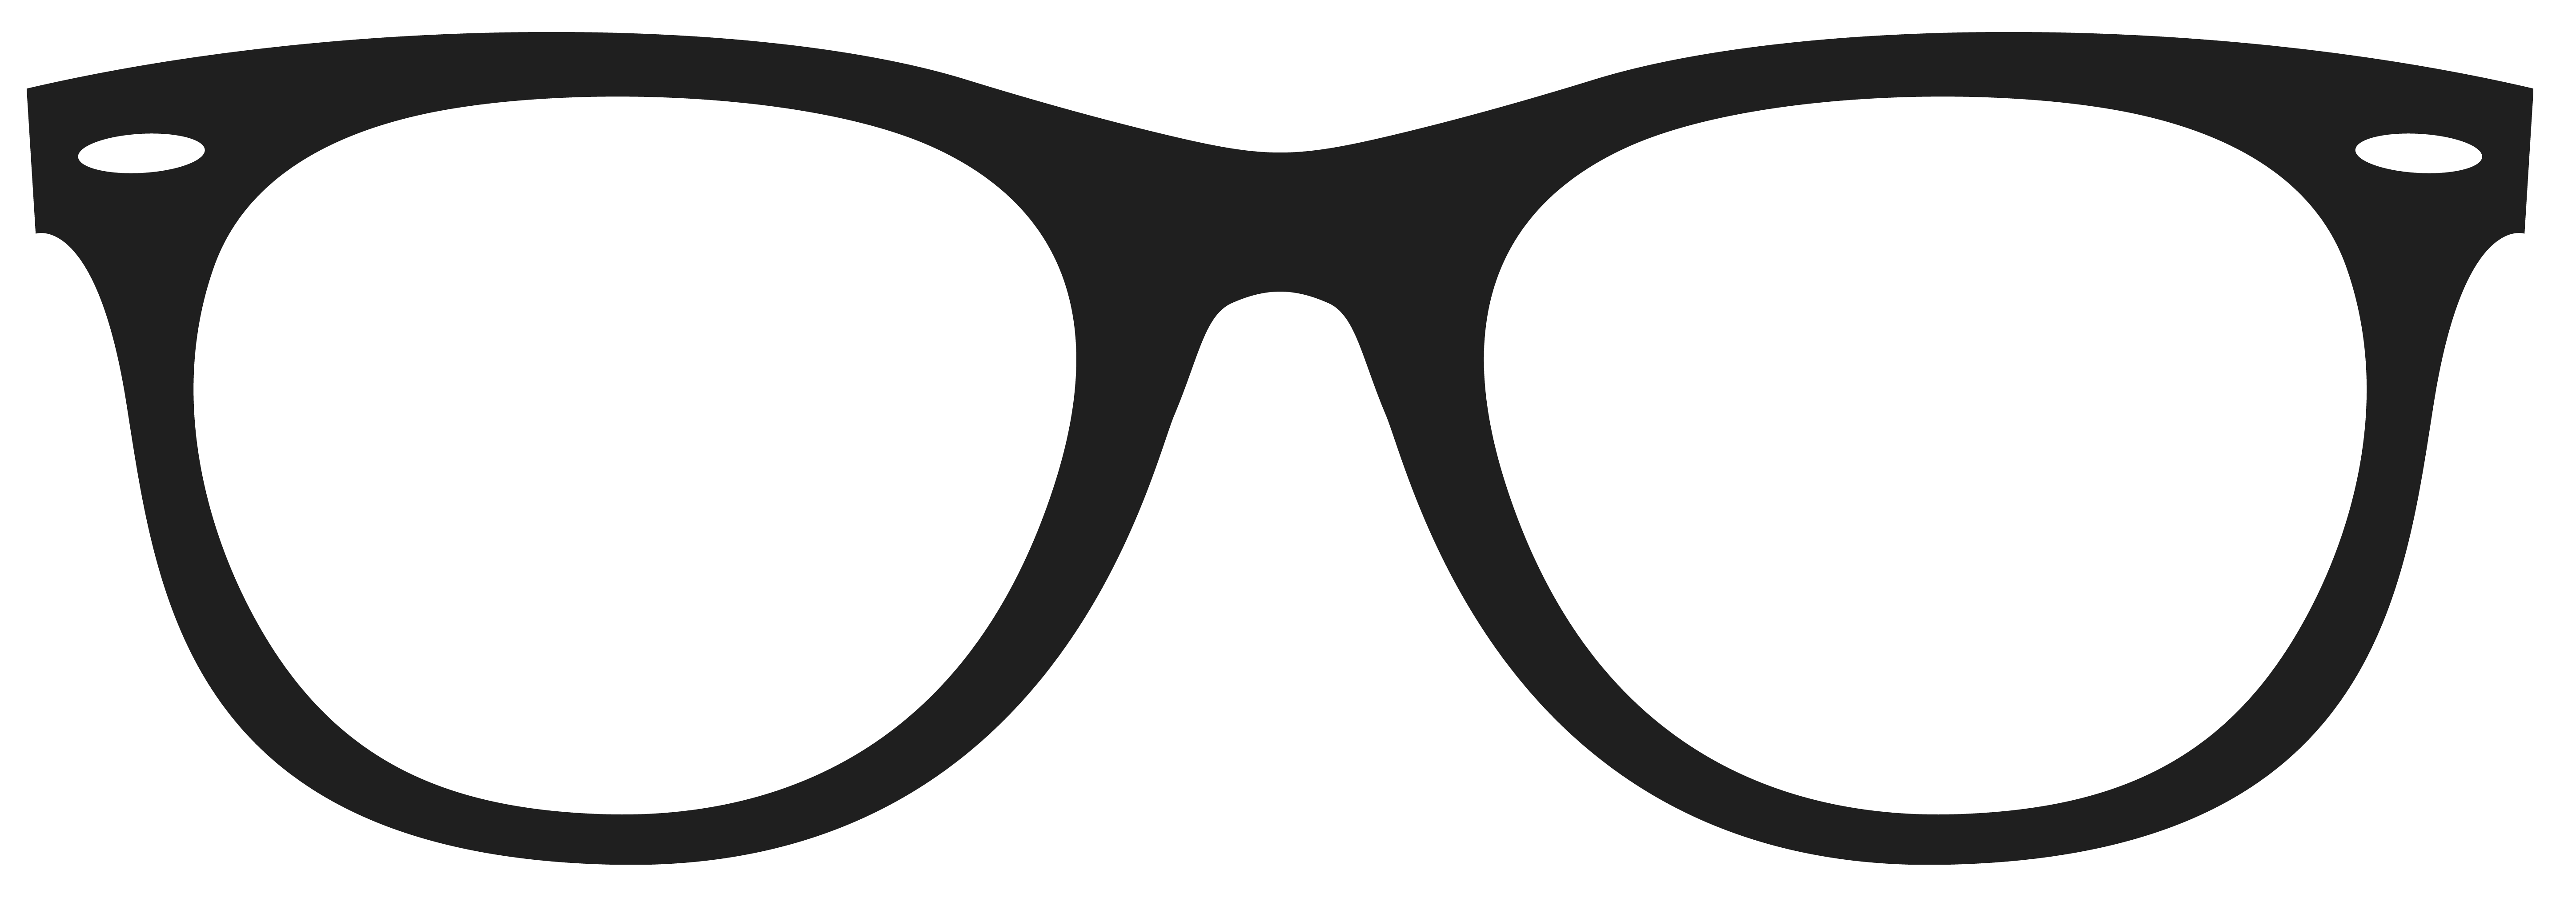 Ray bans for kids. Eyeglasses clipart womens glass